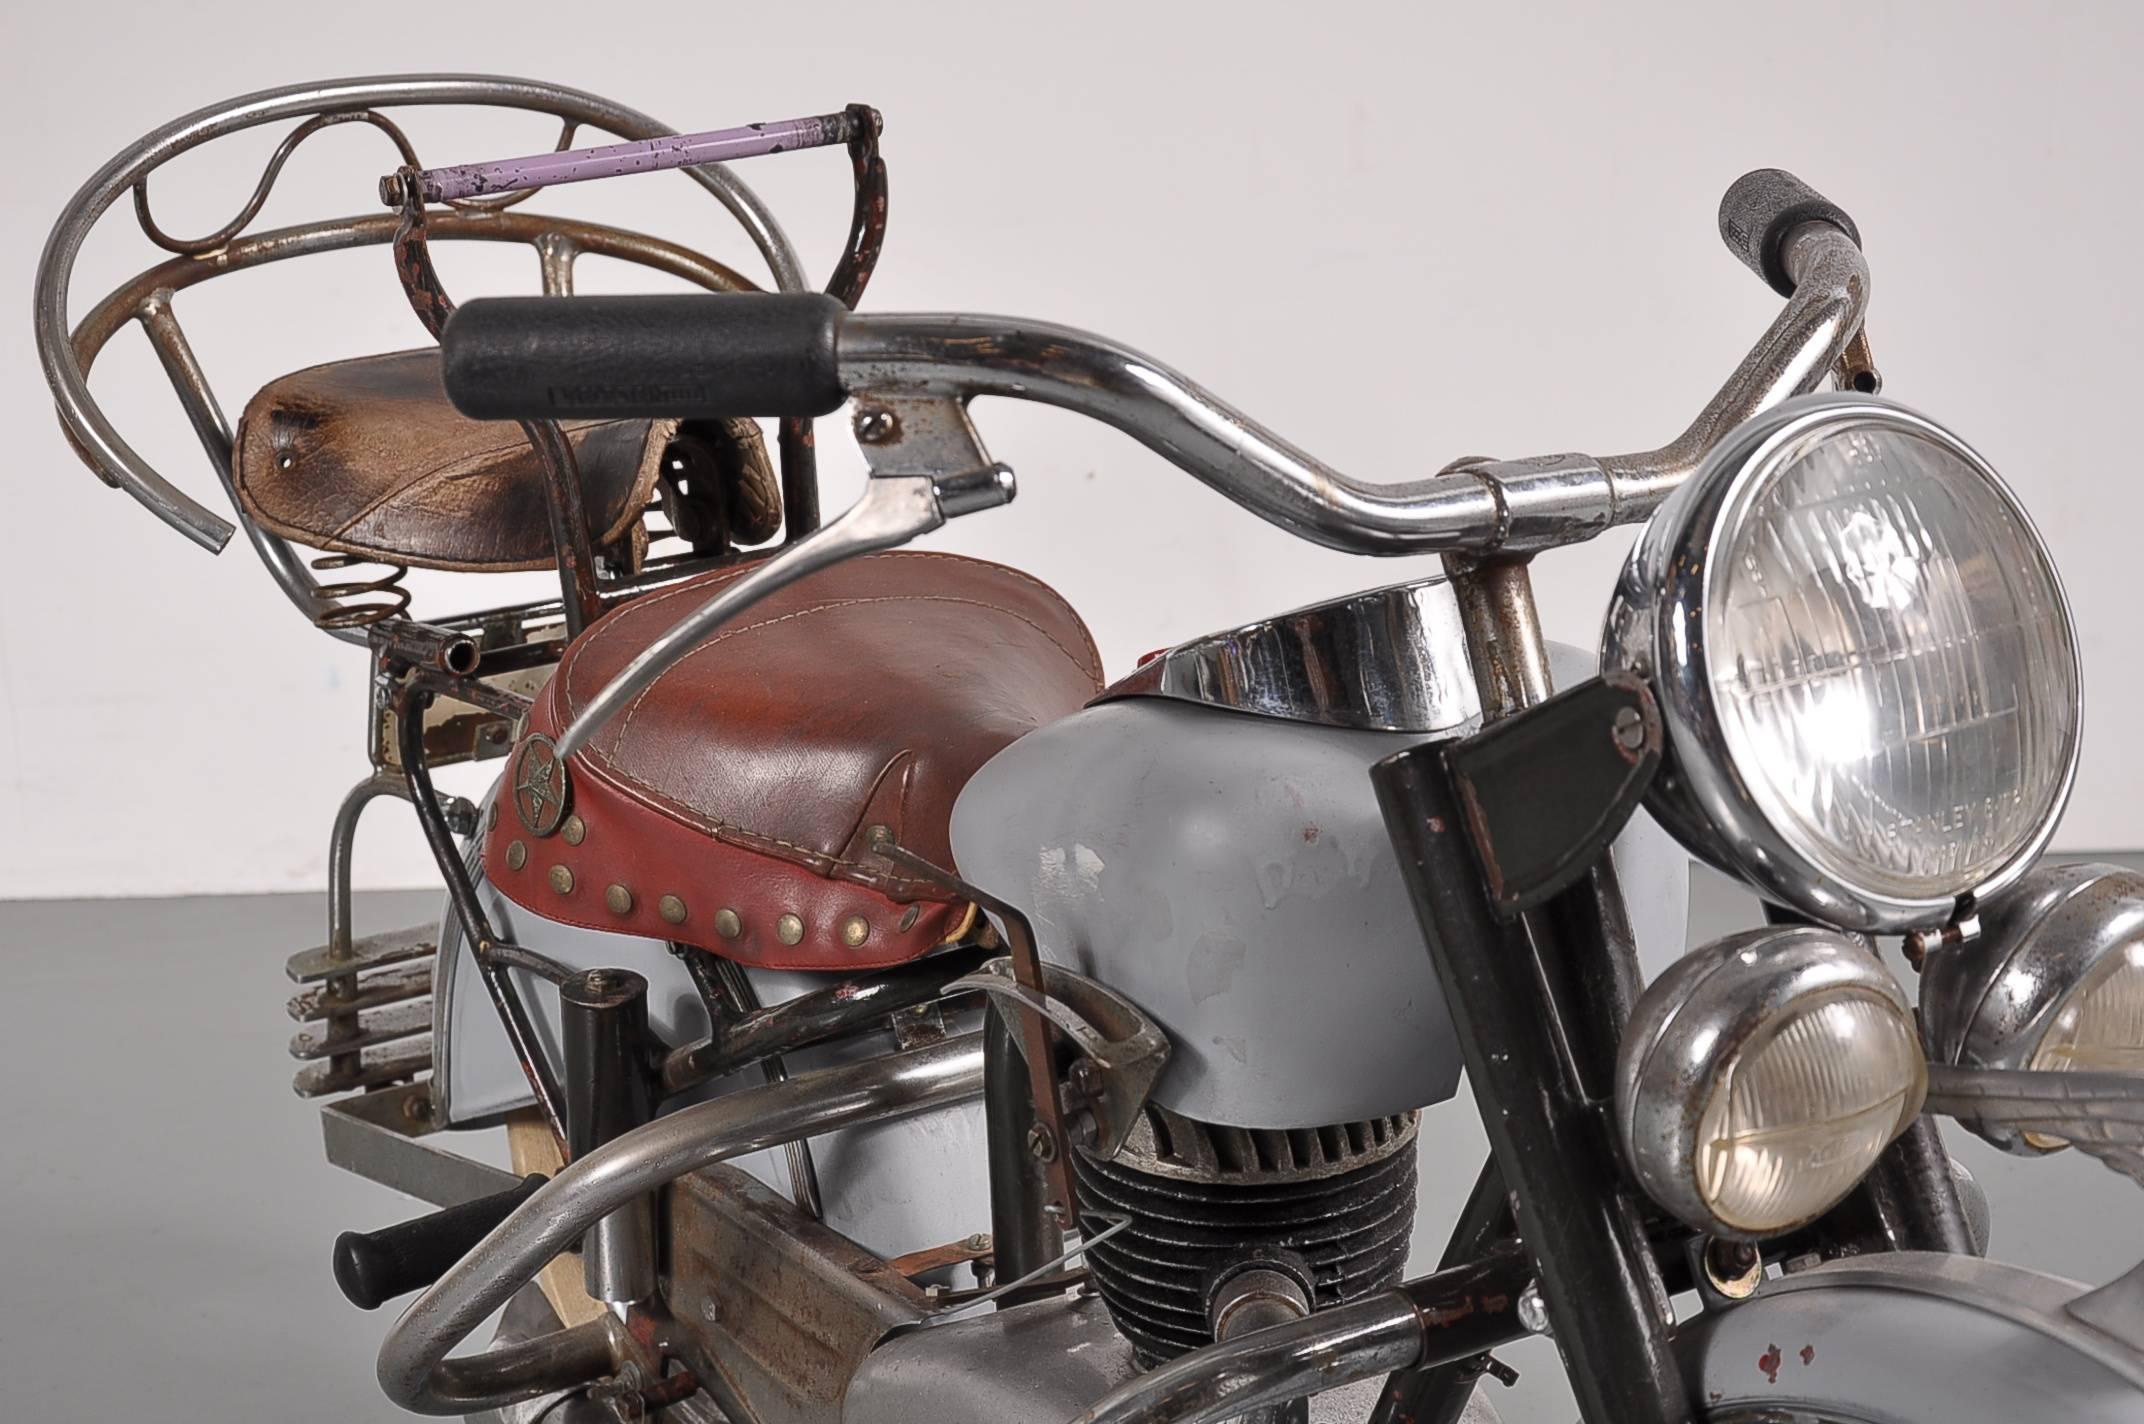 1950 motorbike